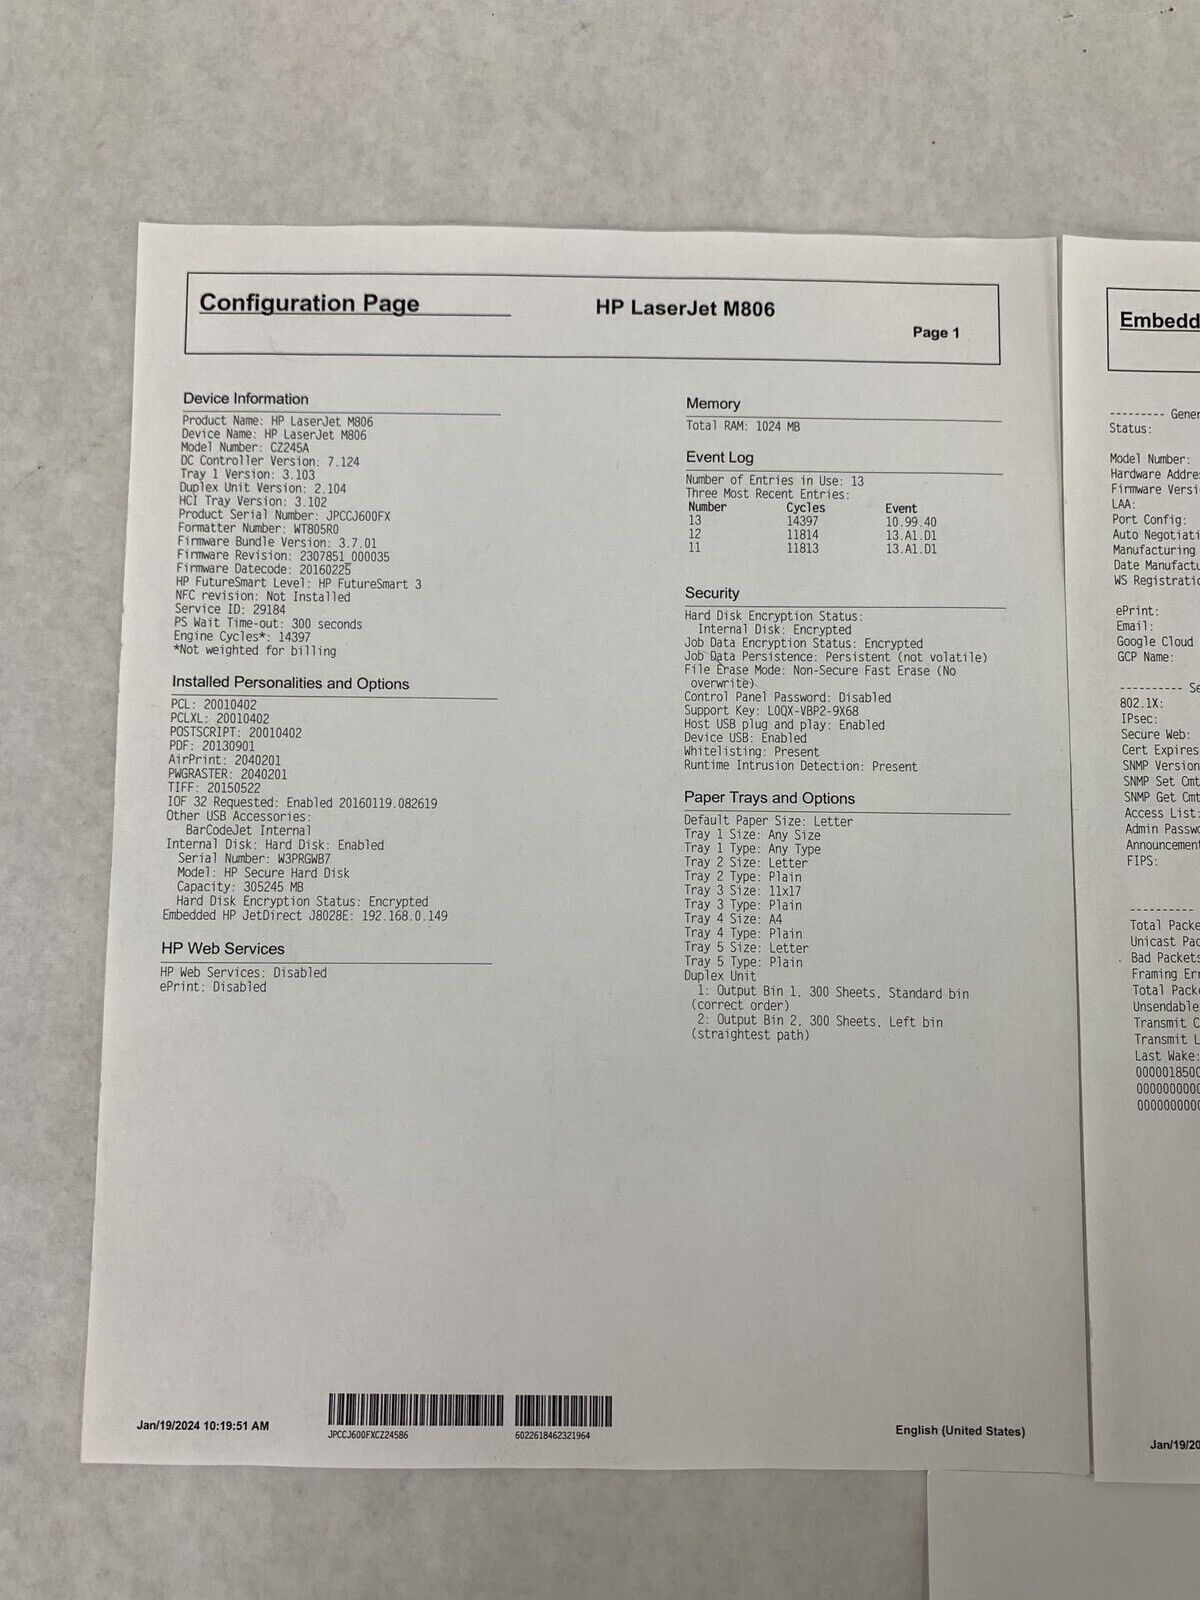 HP LaserJet Enterprise M806X CZ245A Multifunction Printer Tested and Working